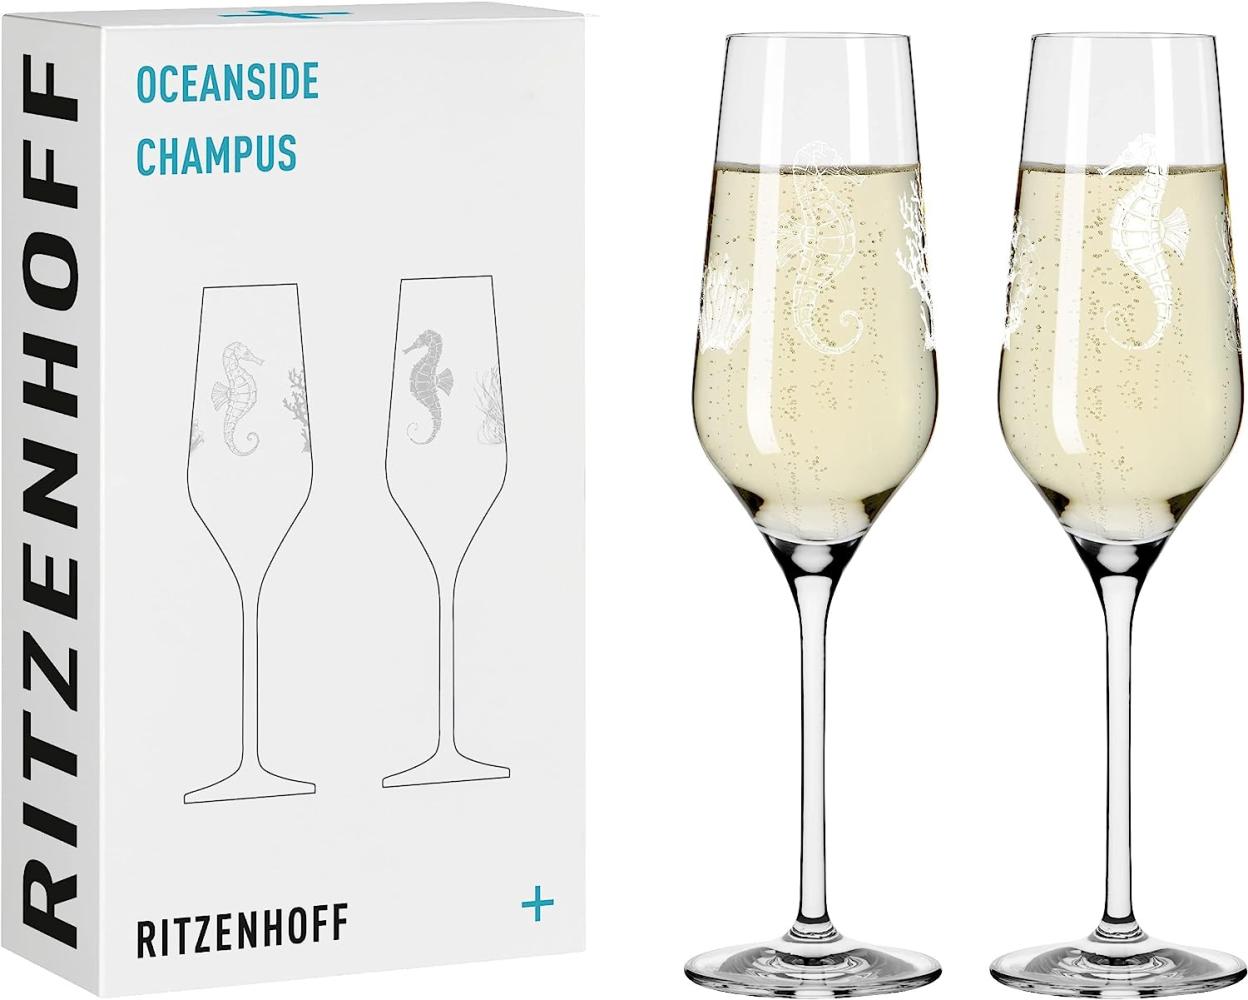 Ritzenhoff 3851001 Champagnerglas-Set #1 OCEANSIDE Romi Bohnenberg 2022 Bild 1